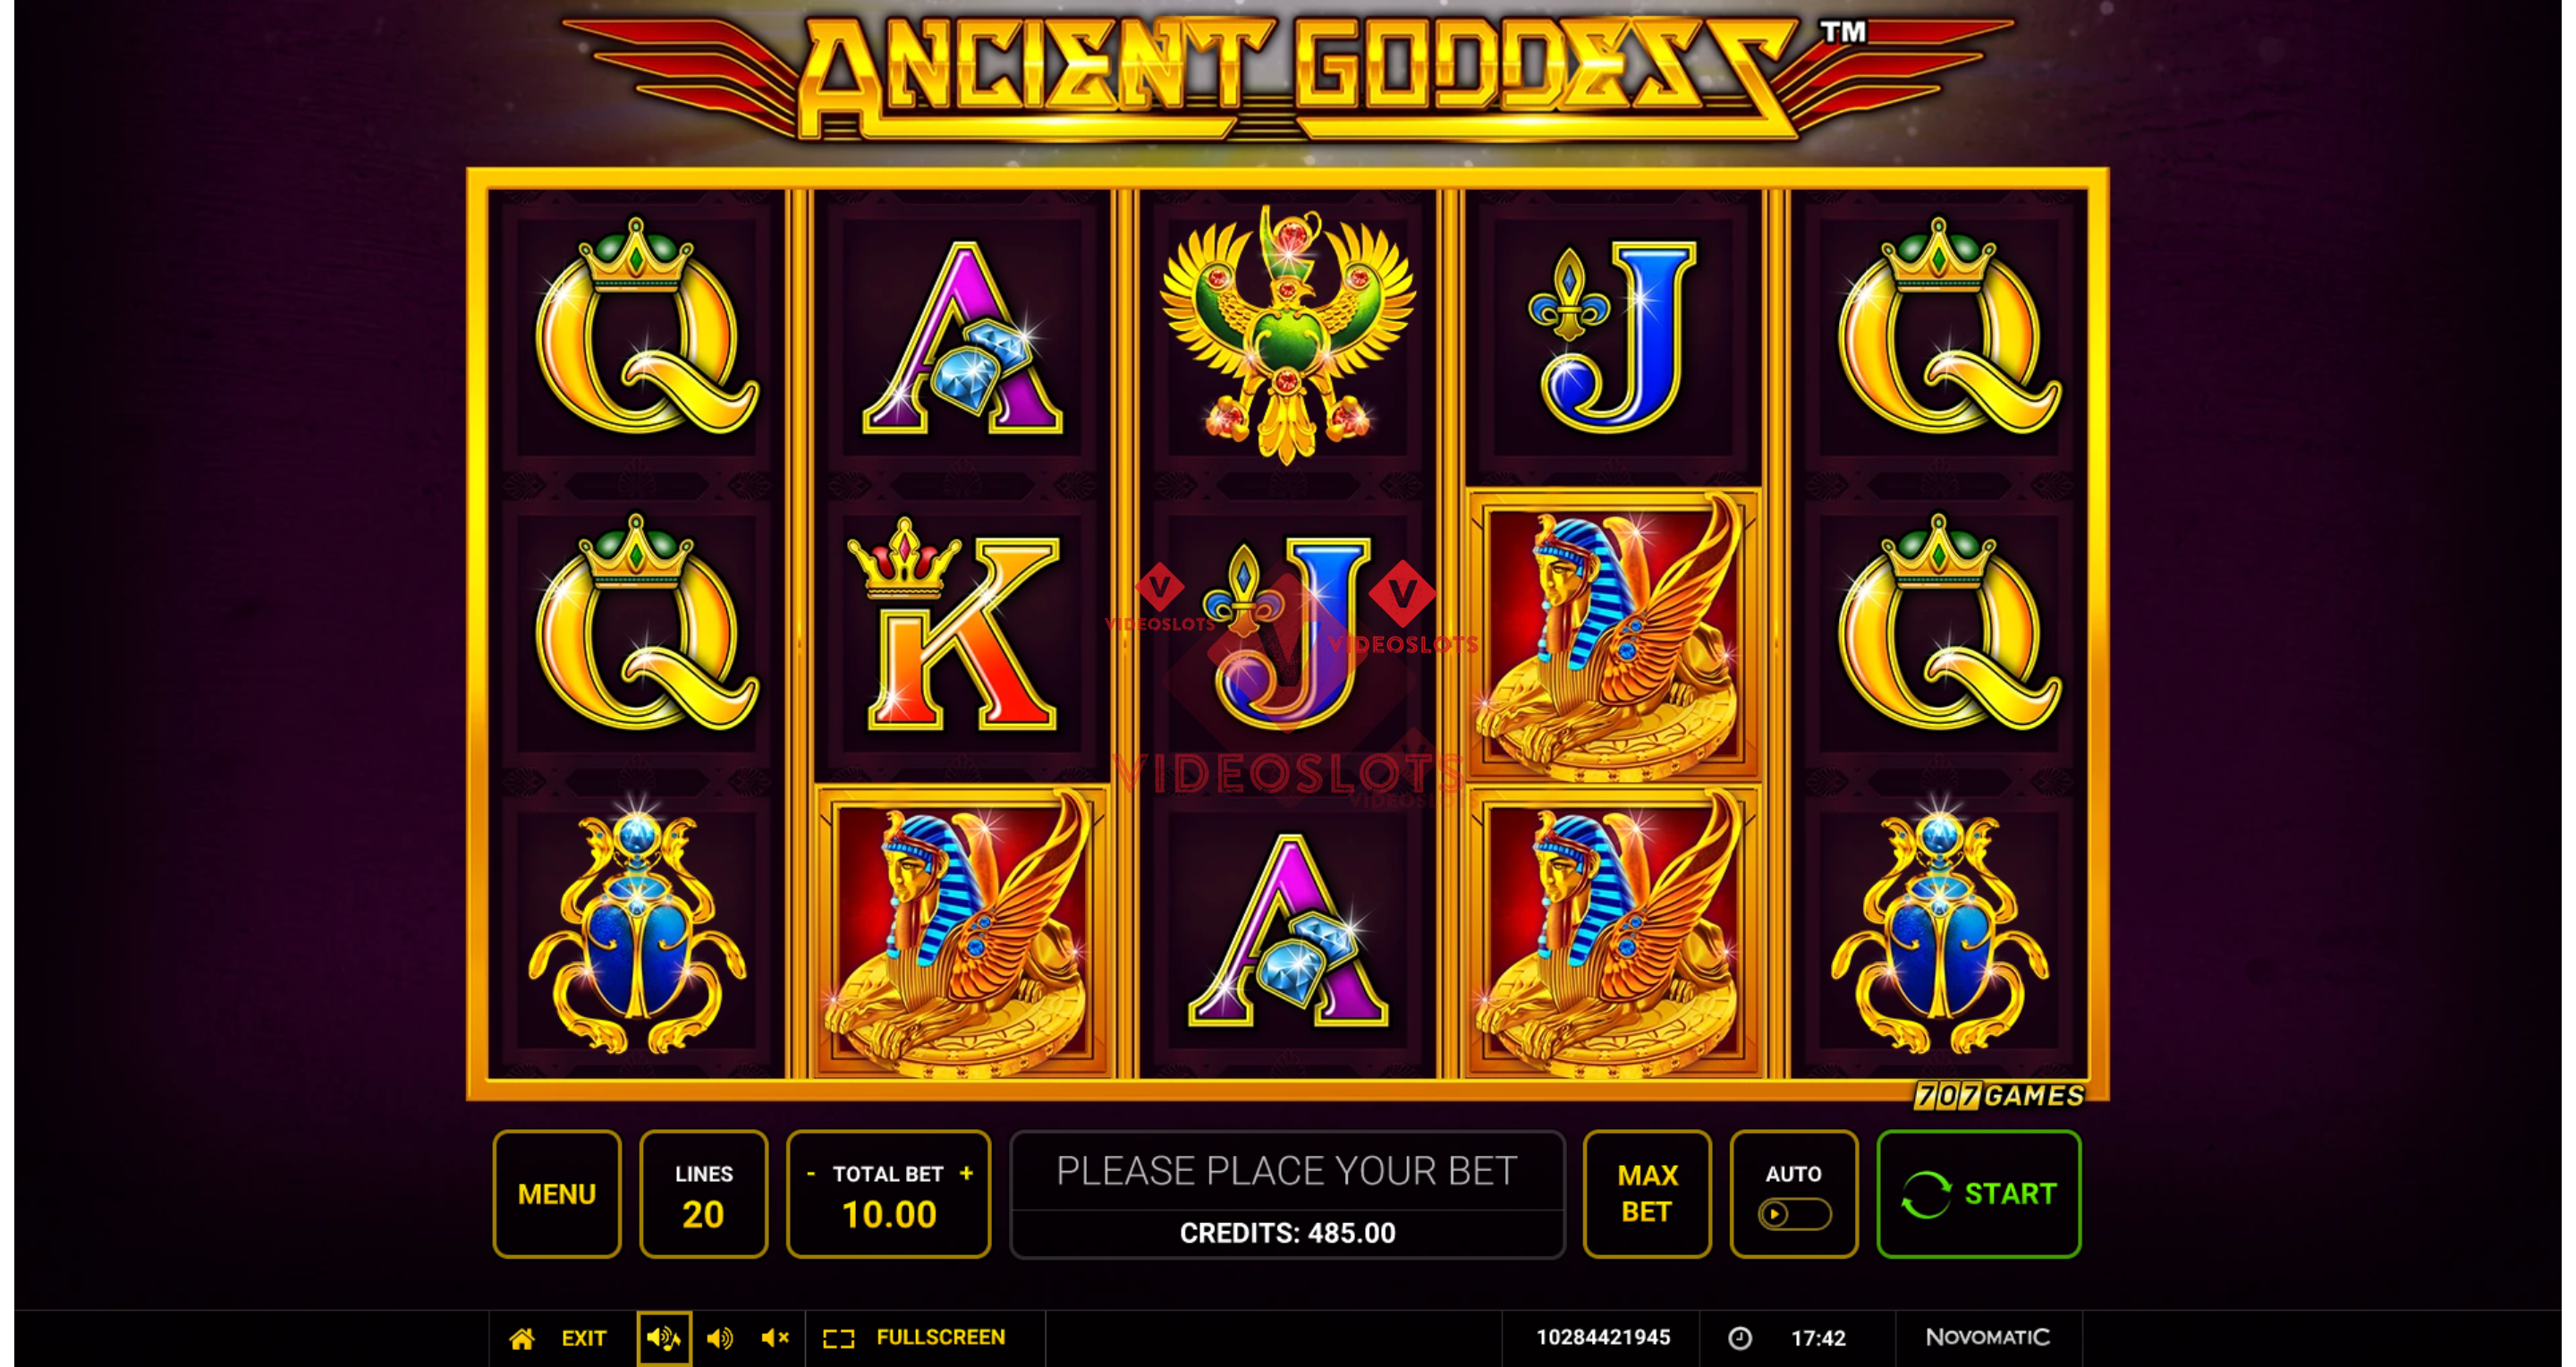 Base Game for Ancient Goddess slot from Greentube